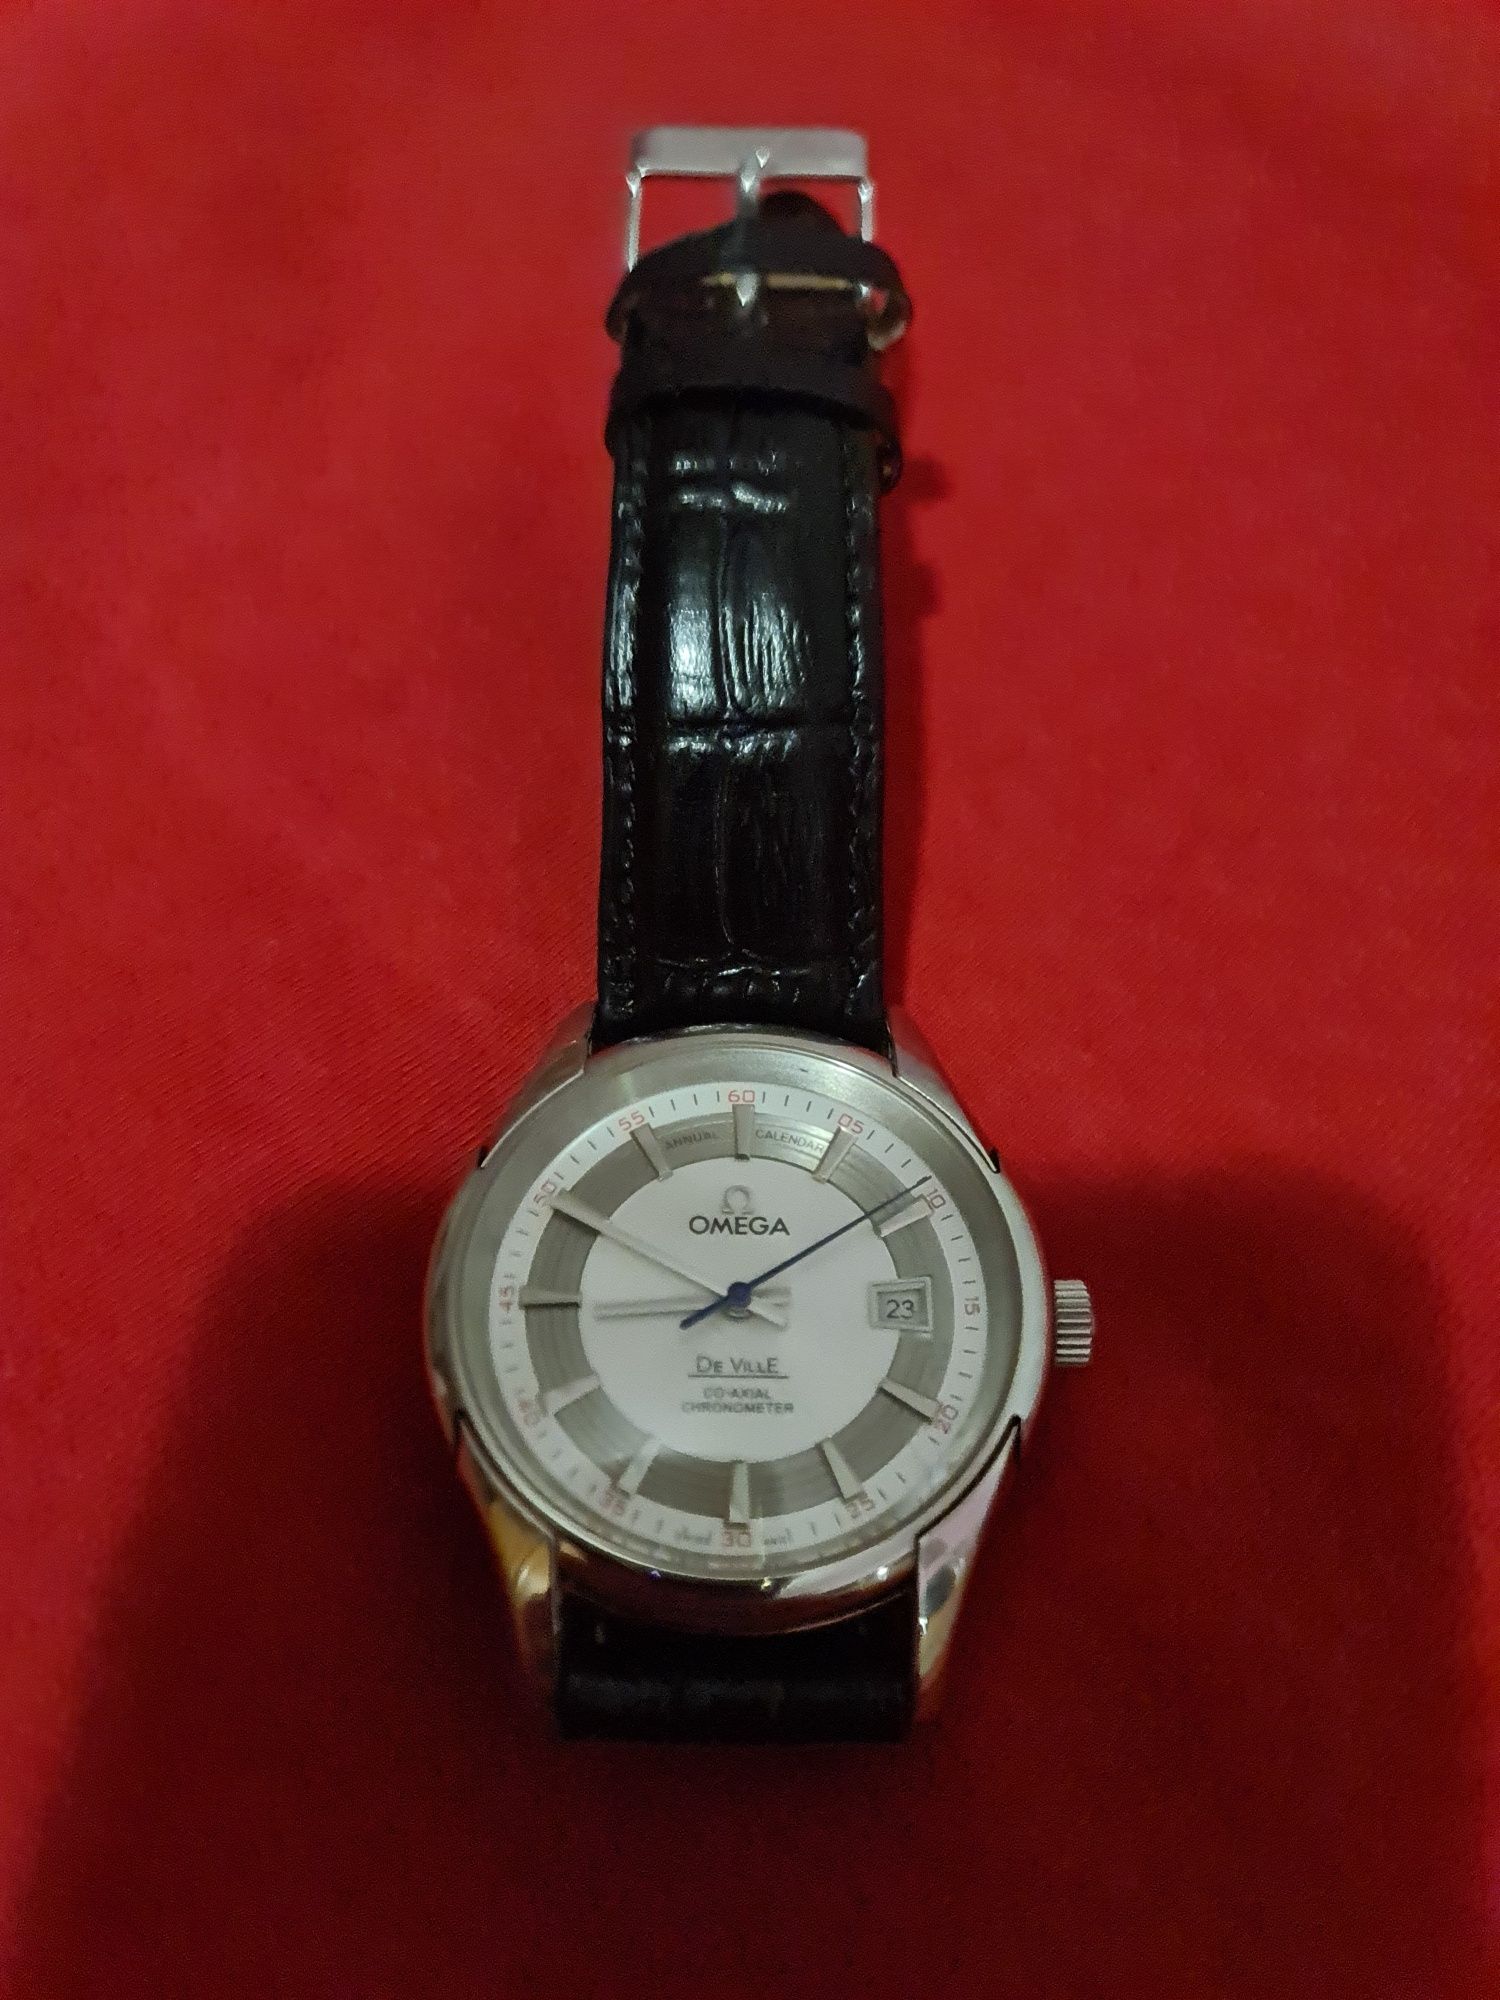 Omega de ville co-axial chronometer недорого механічний годинник